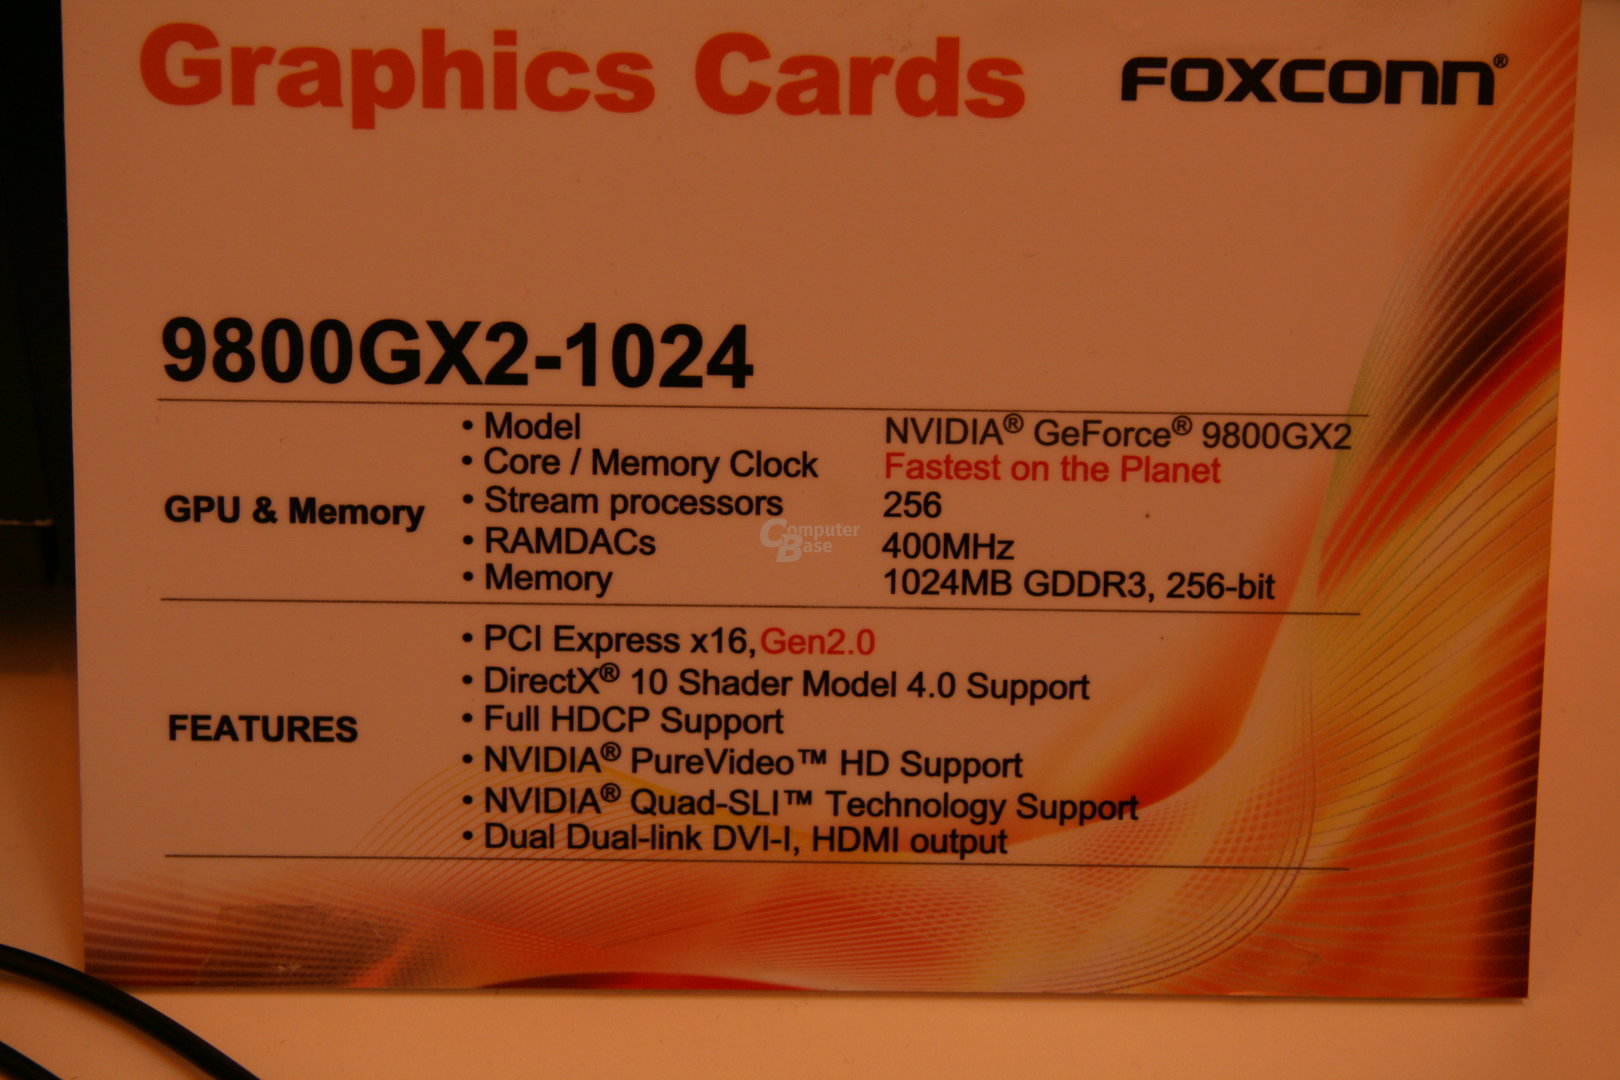 Foxconn GeForce 9800 GX2